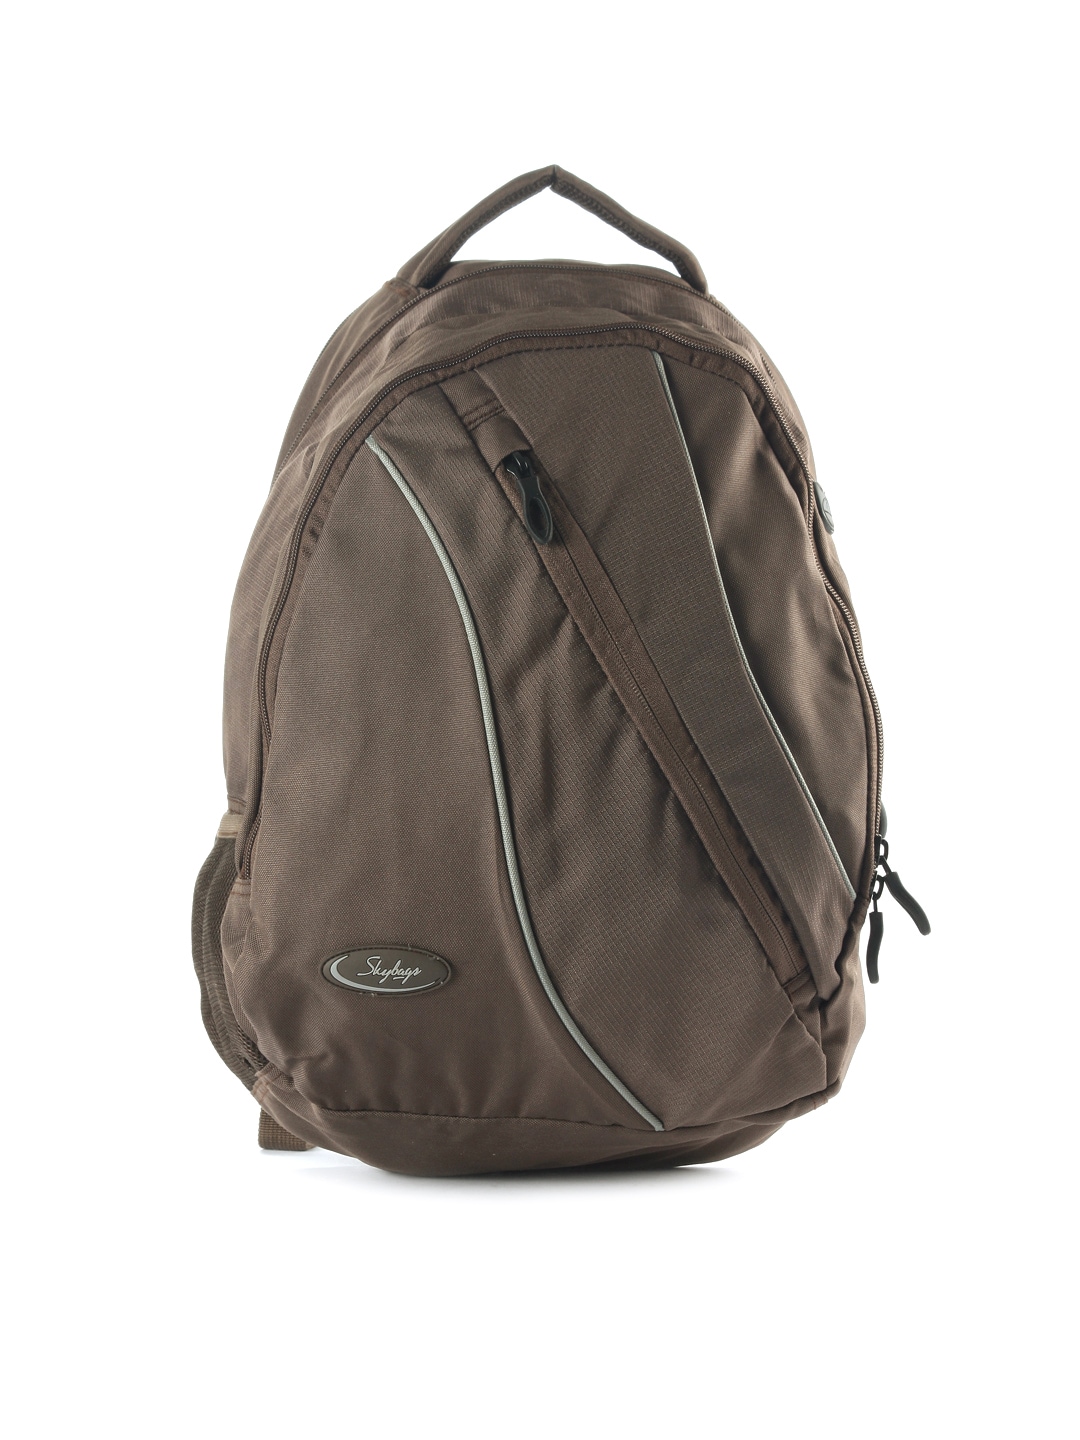 Skybags Unisex Brown Backpack